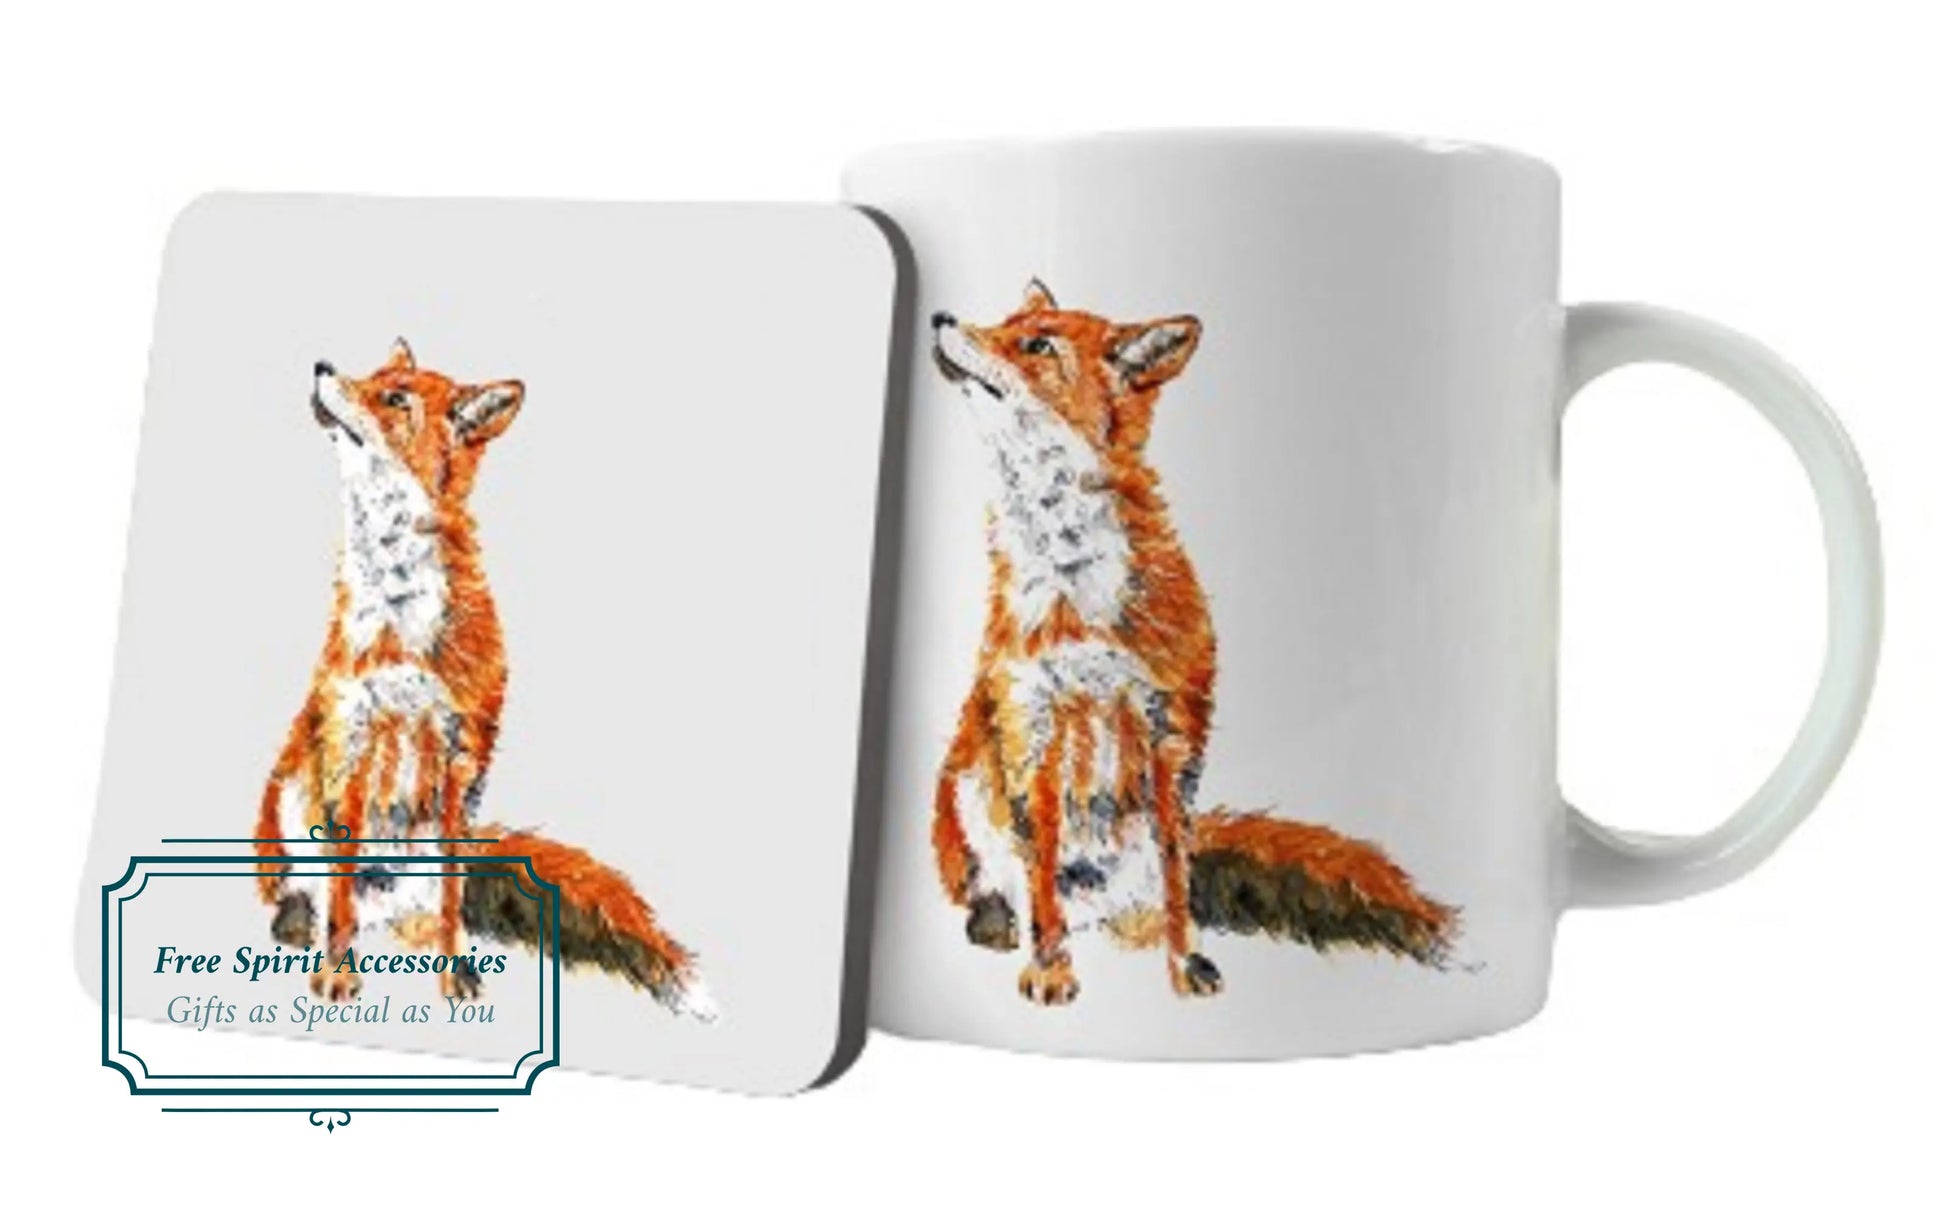  Beautiful Fox Mug and Coaster by Free Spirit Accessories sold by Free Spirit Accessories